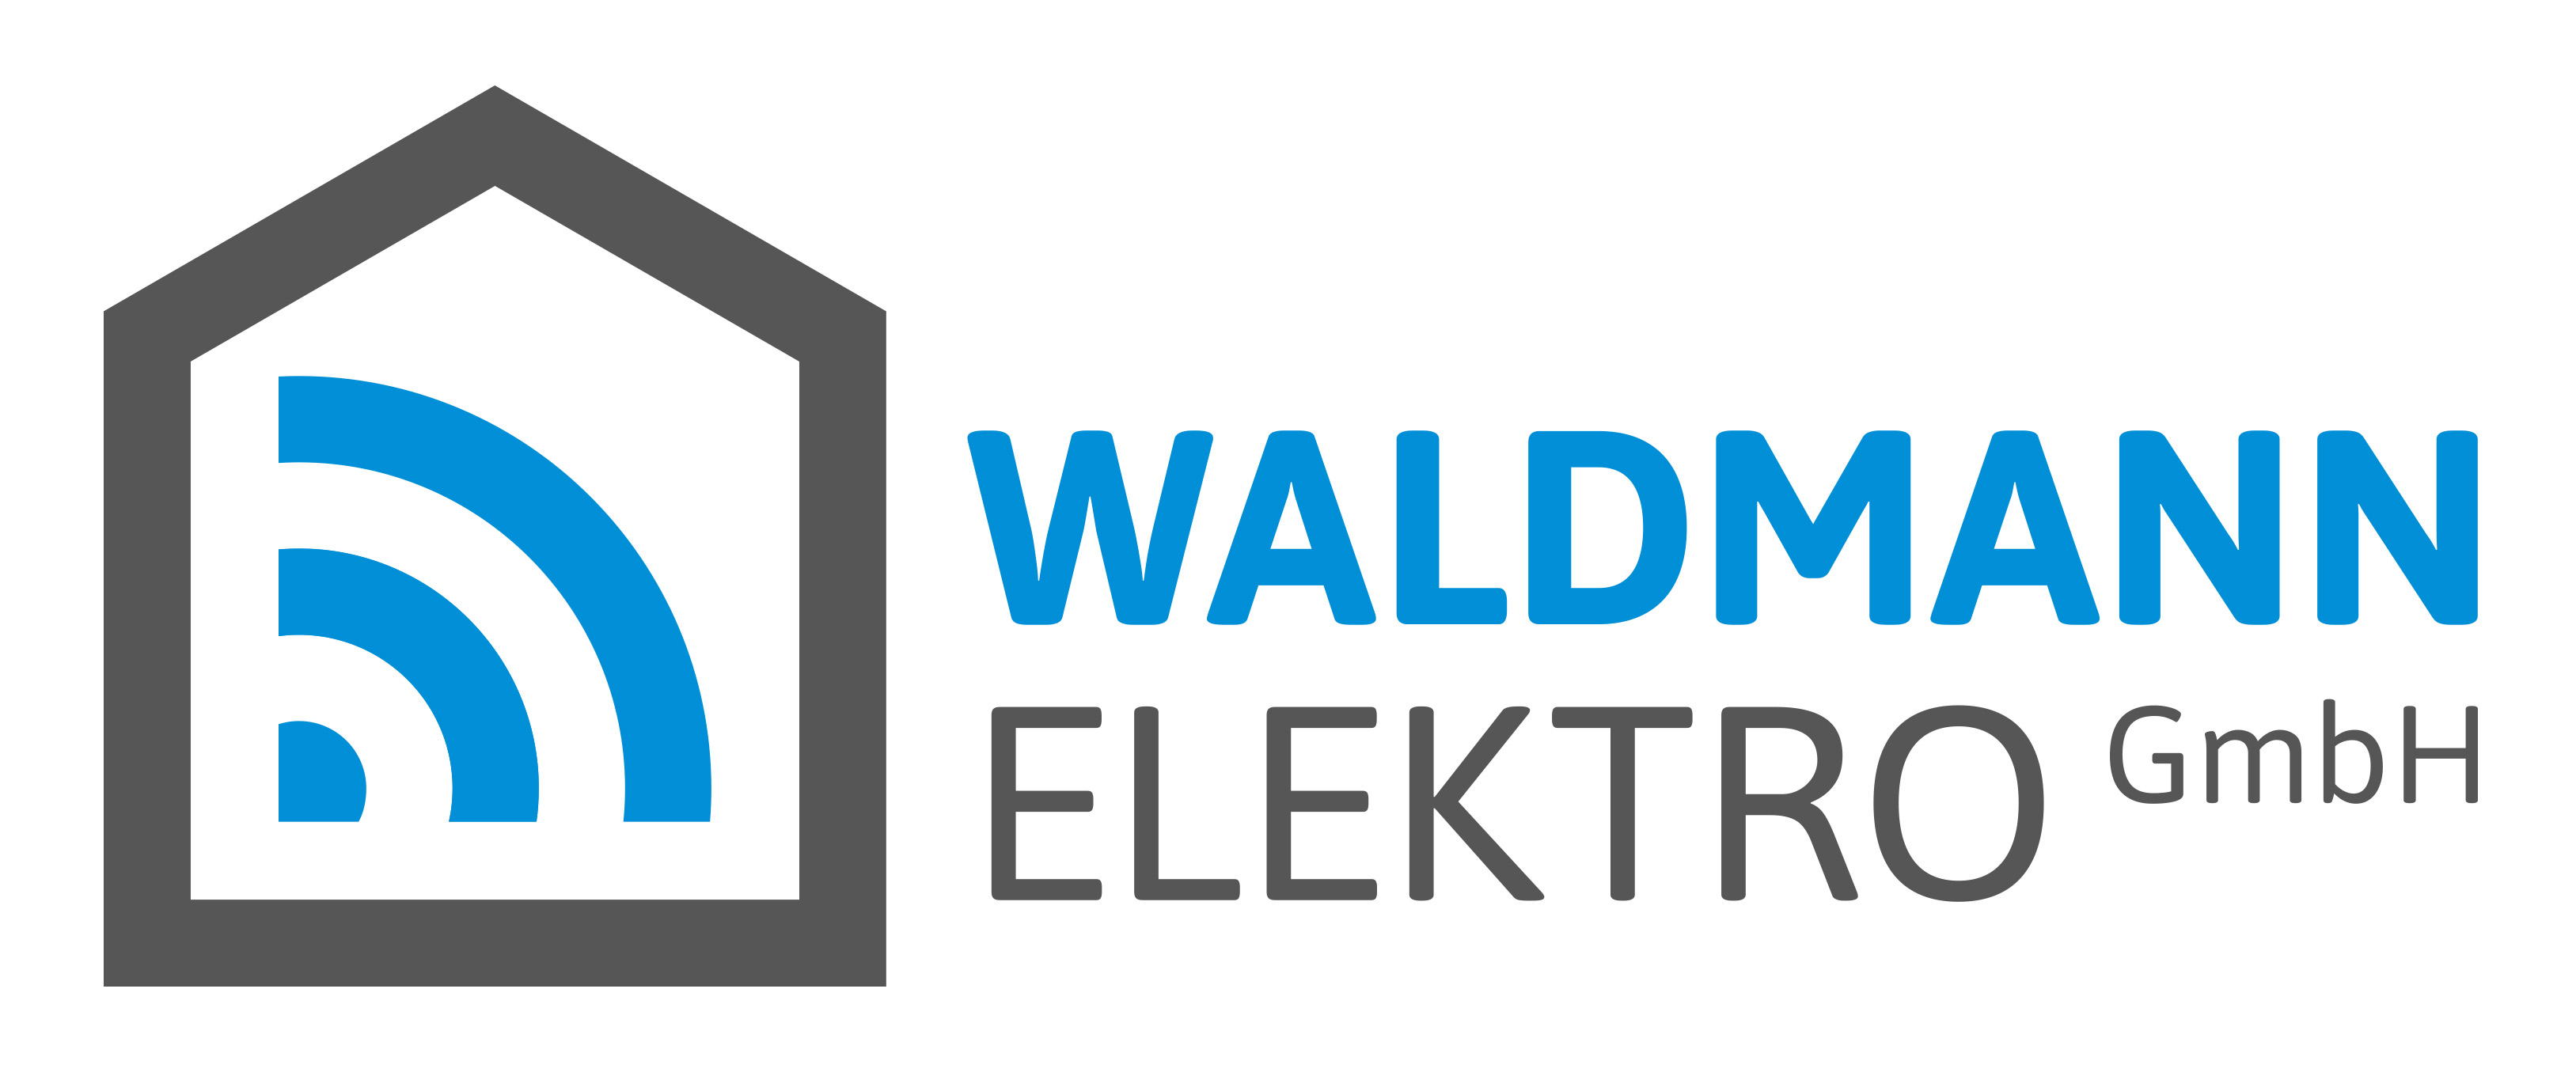 Waldmann Elektro